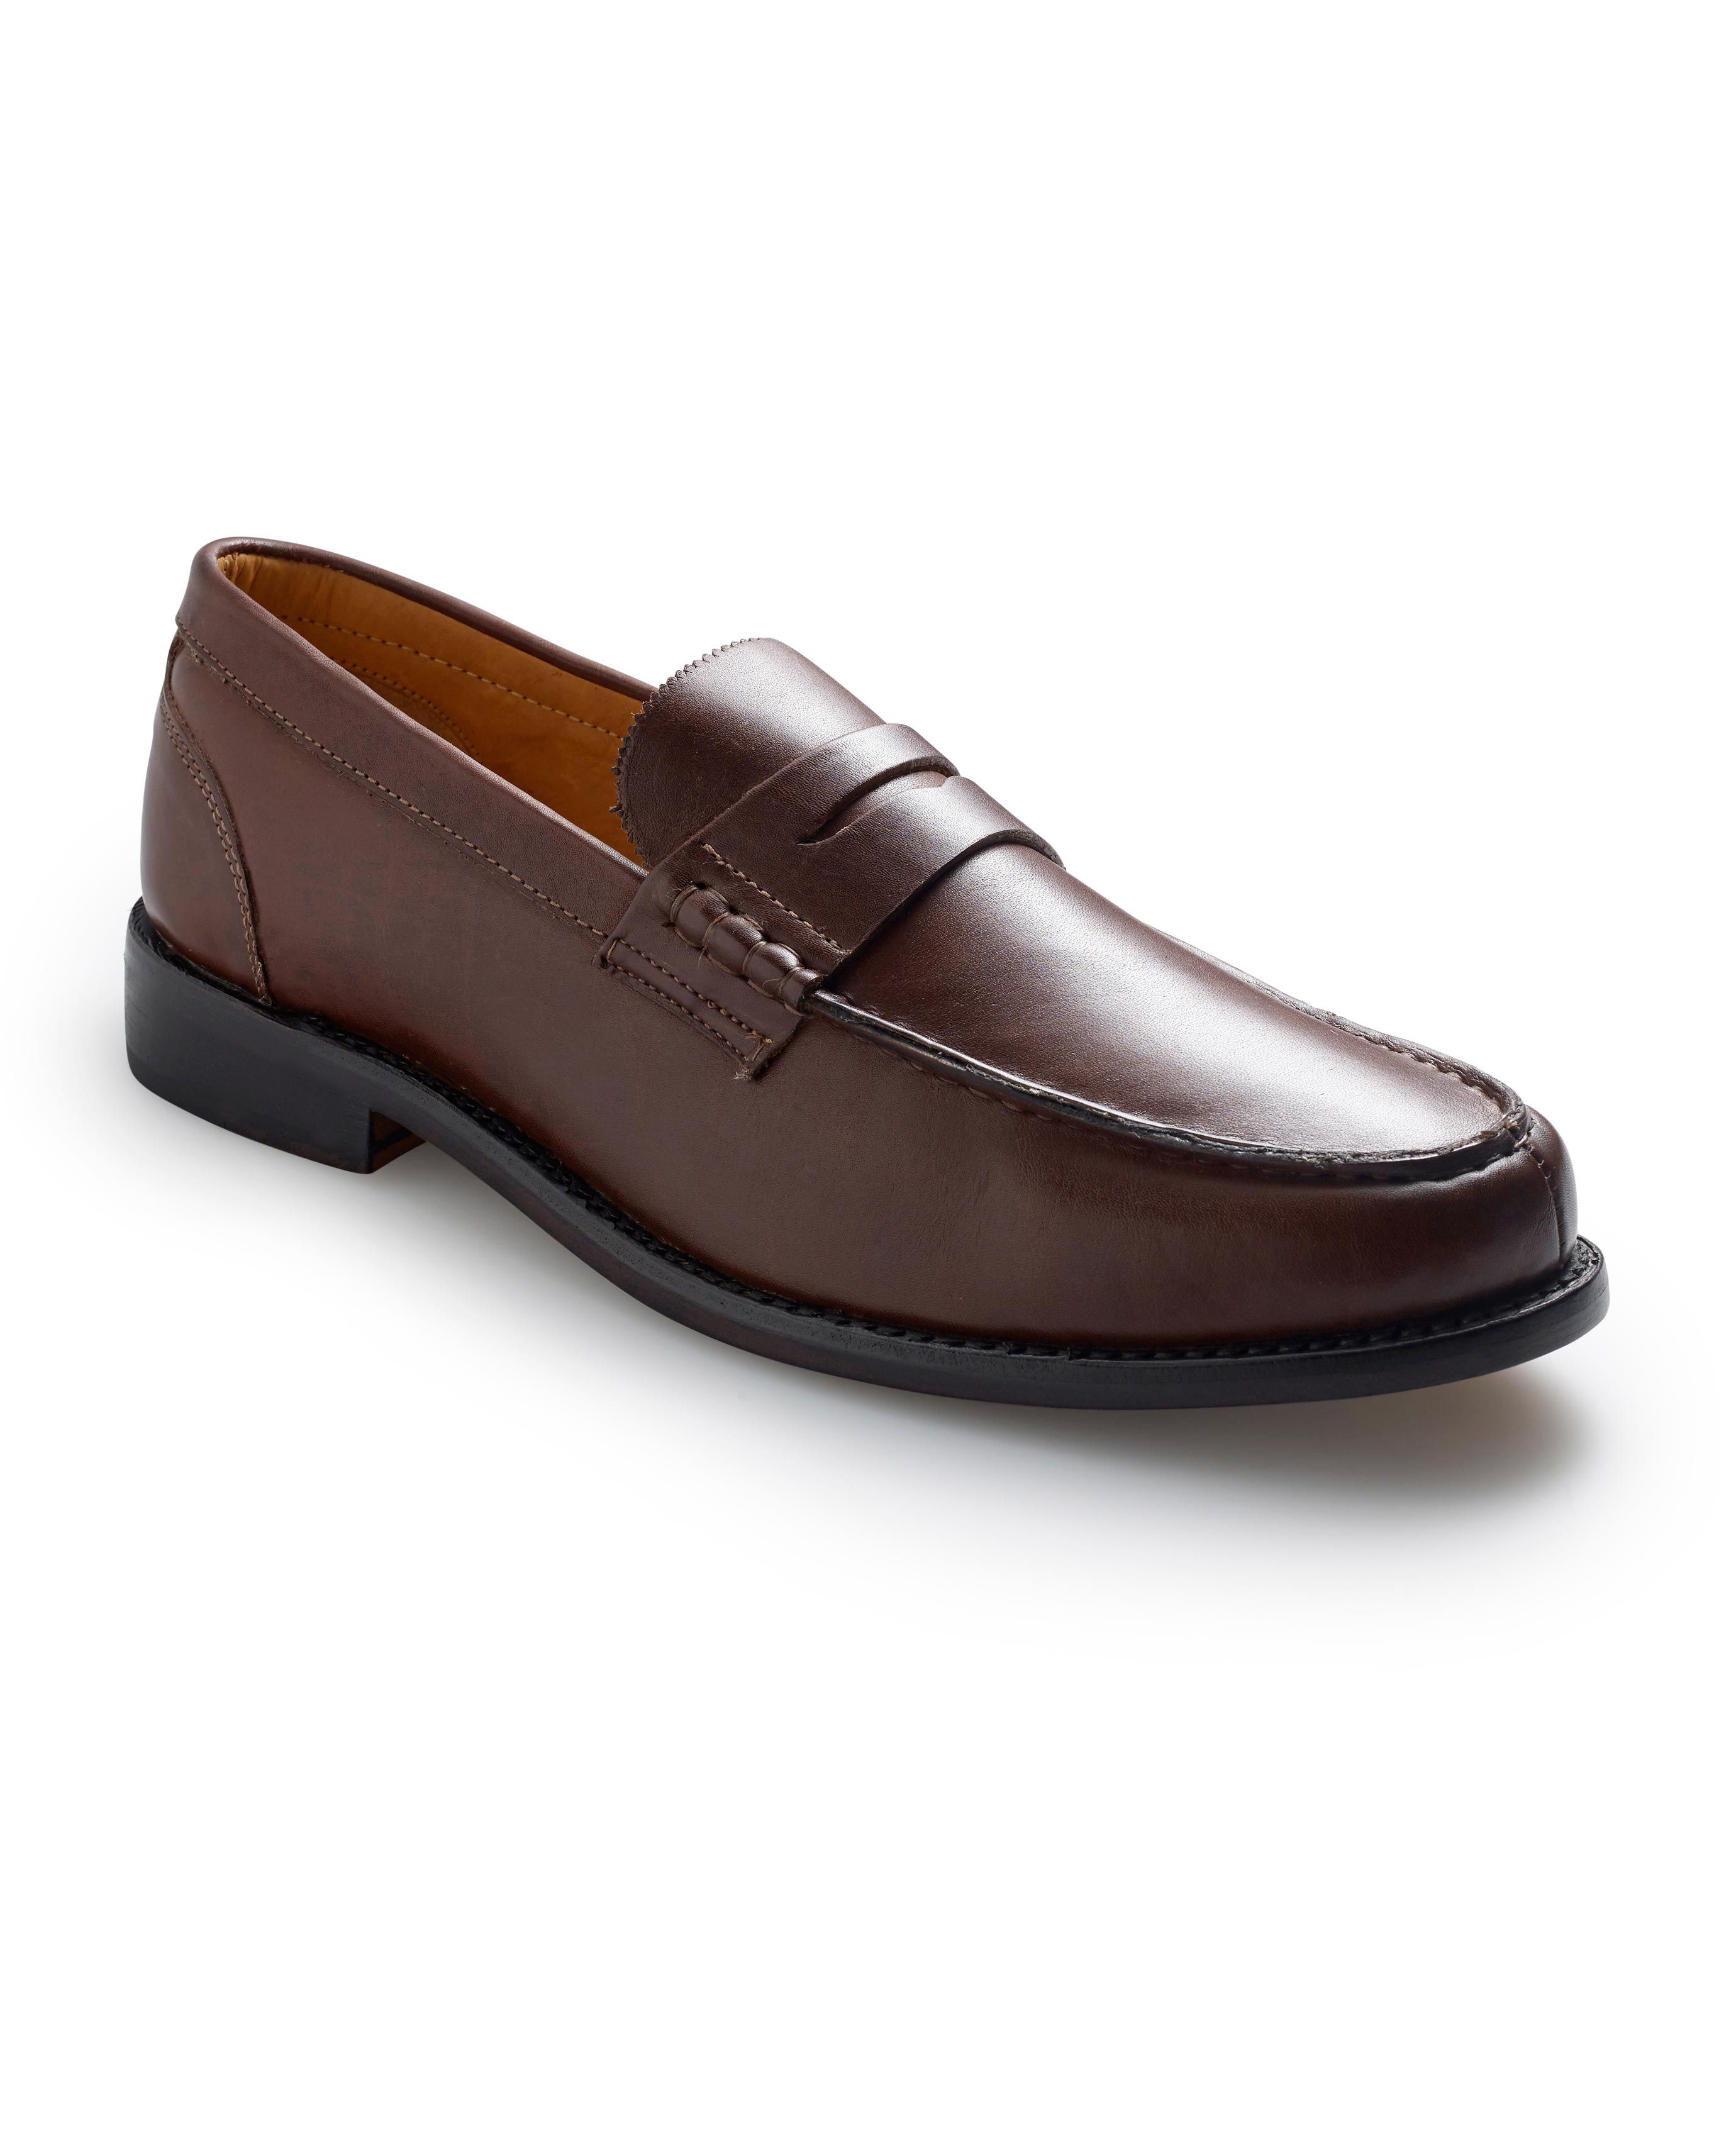 Brown Plain Loafer Shoe From The Savile Row Company | Savile Row Co